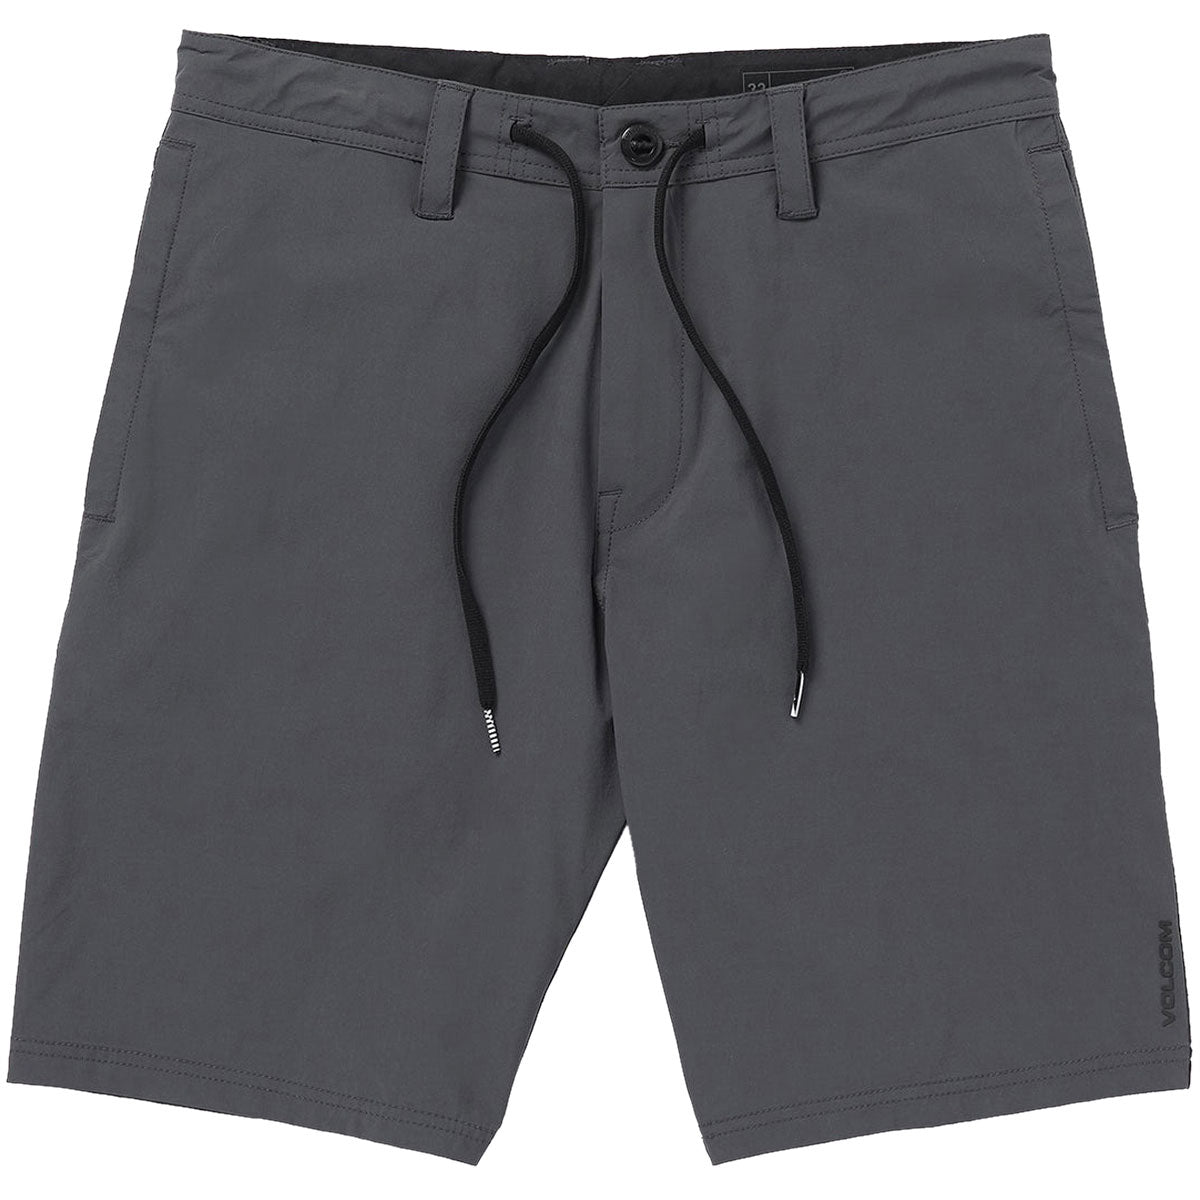 Volcom Voltripper Hybrid 20 Shorts - Asphalt Black image 1